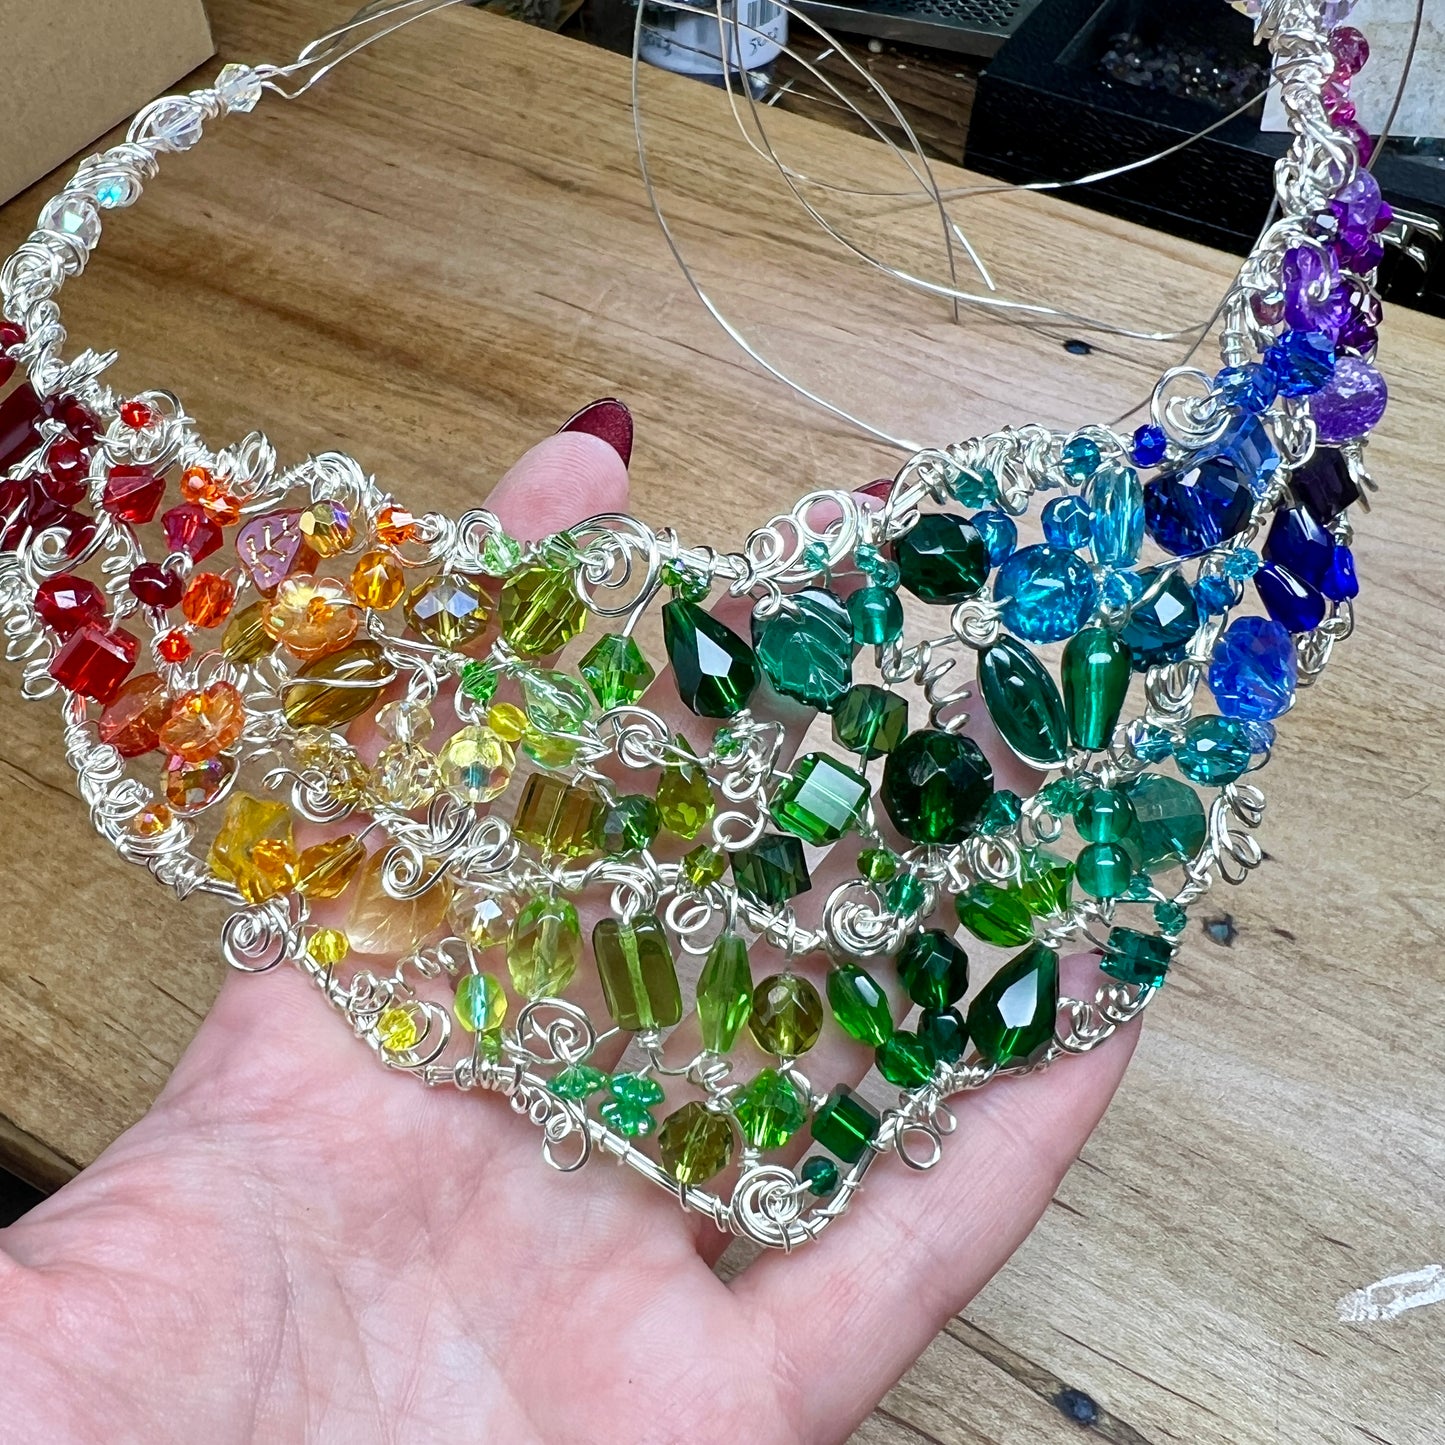 The Big Rainbow Necklace